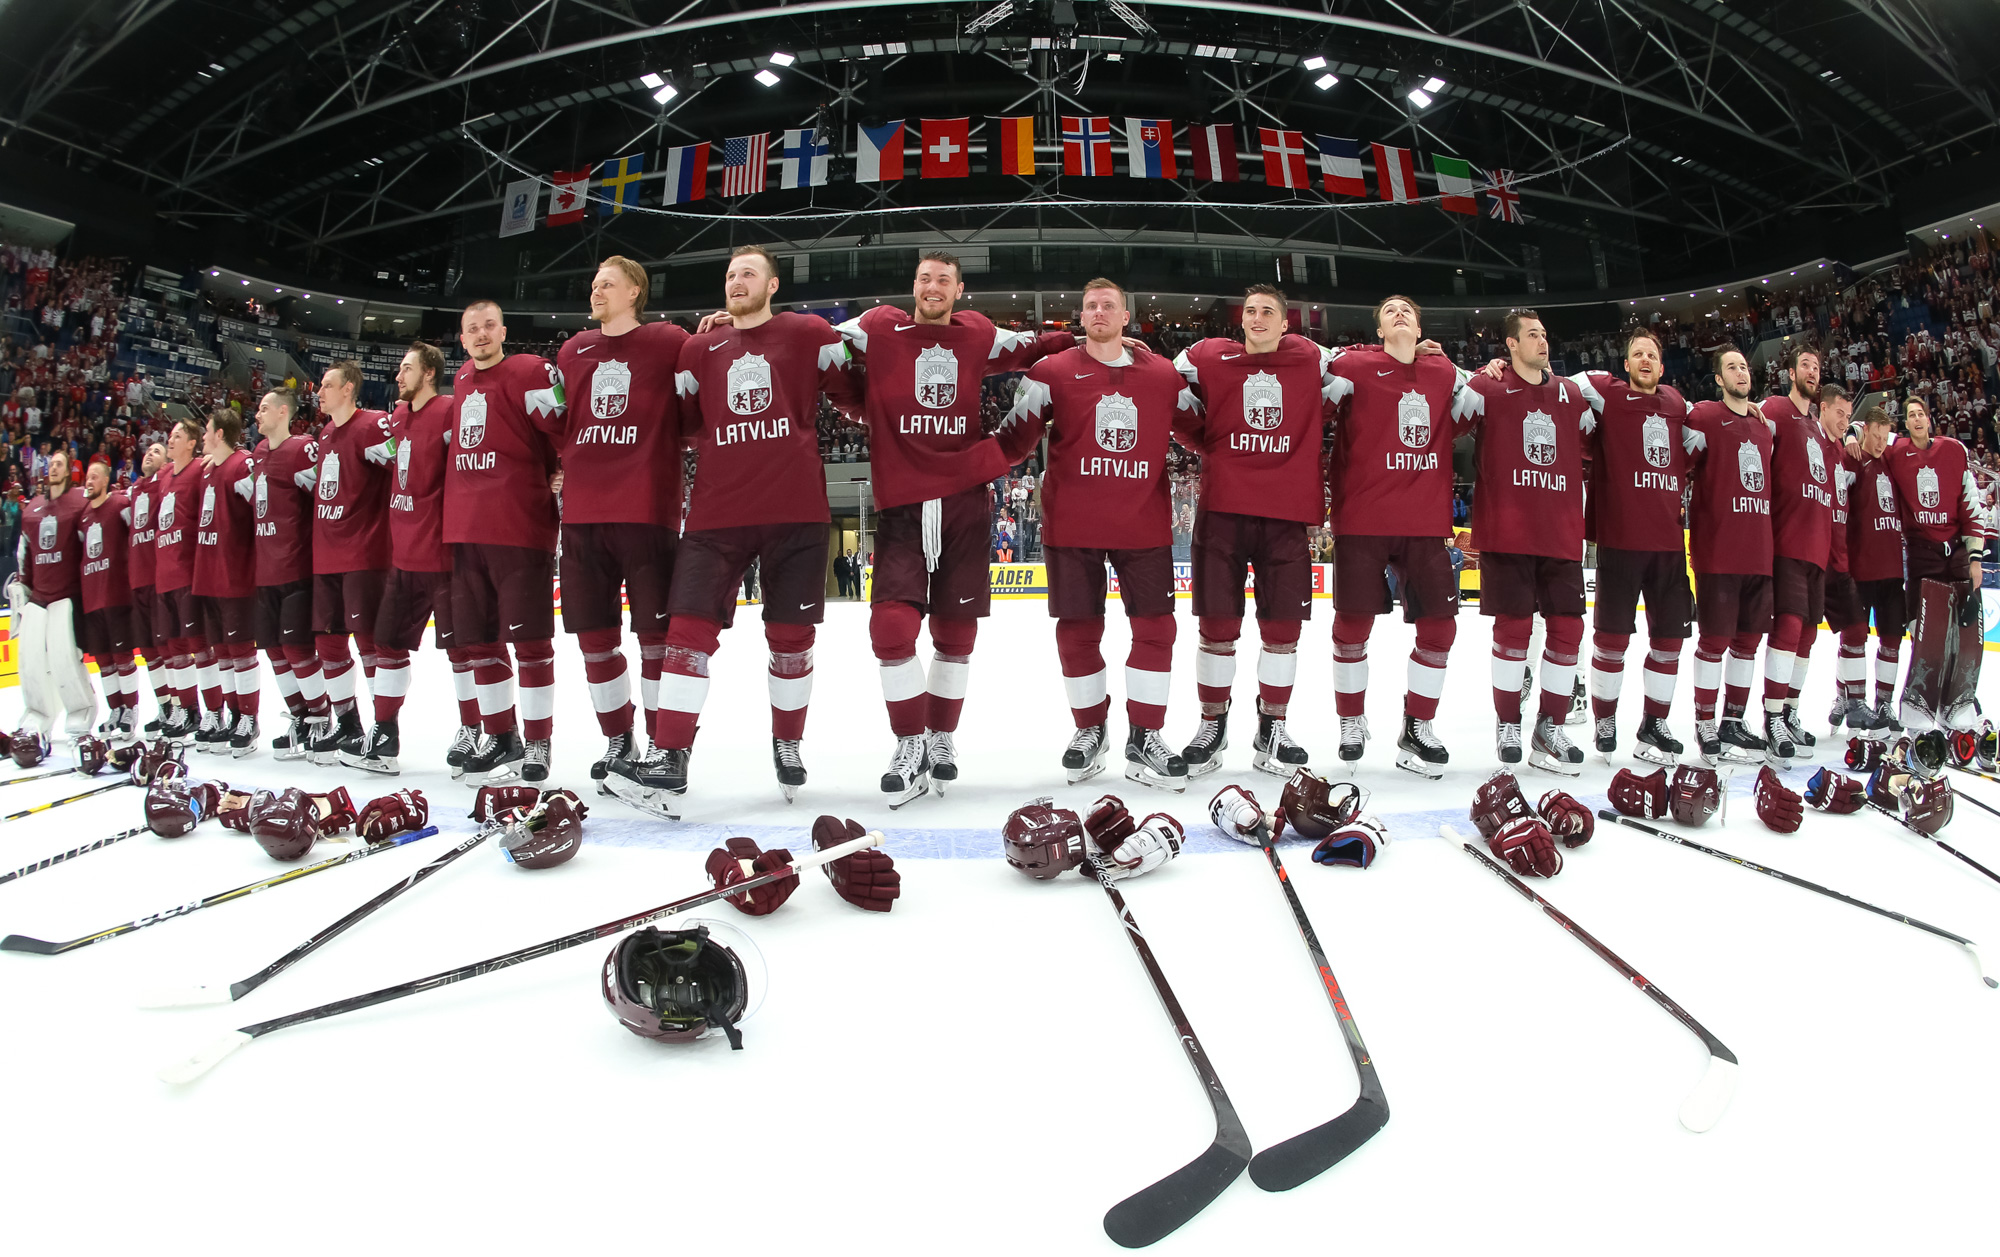 IIHF Latvia opens with a win